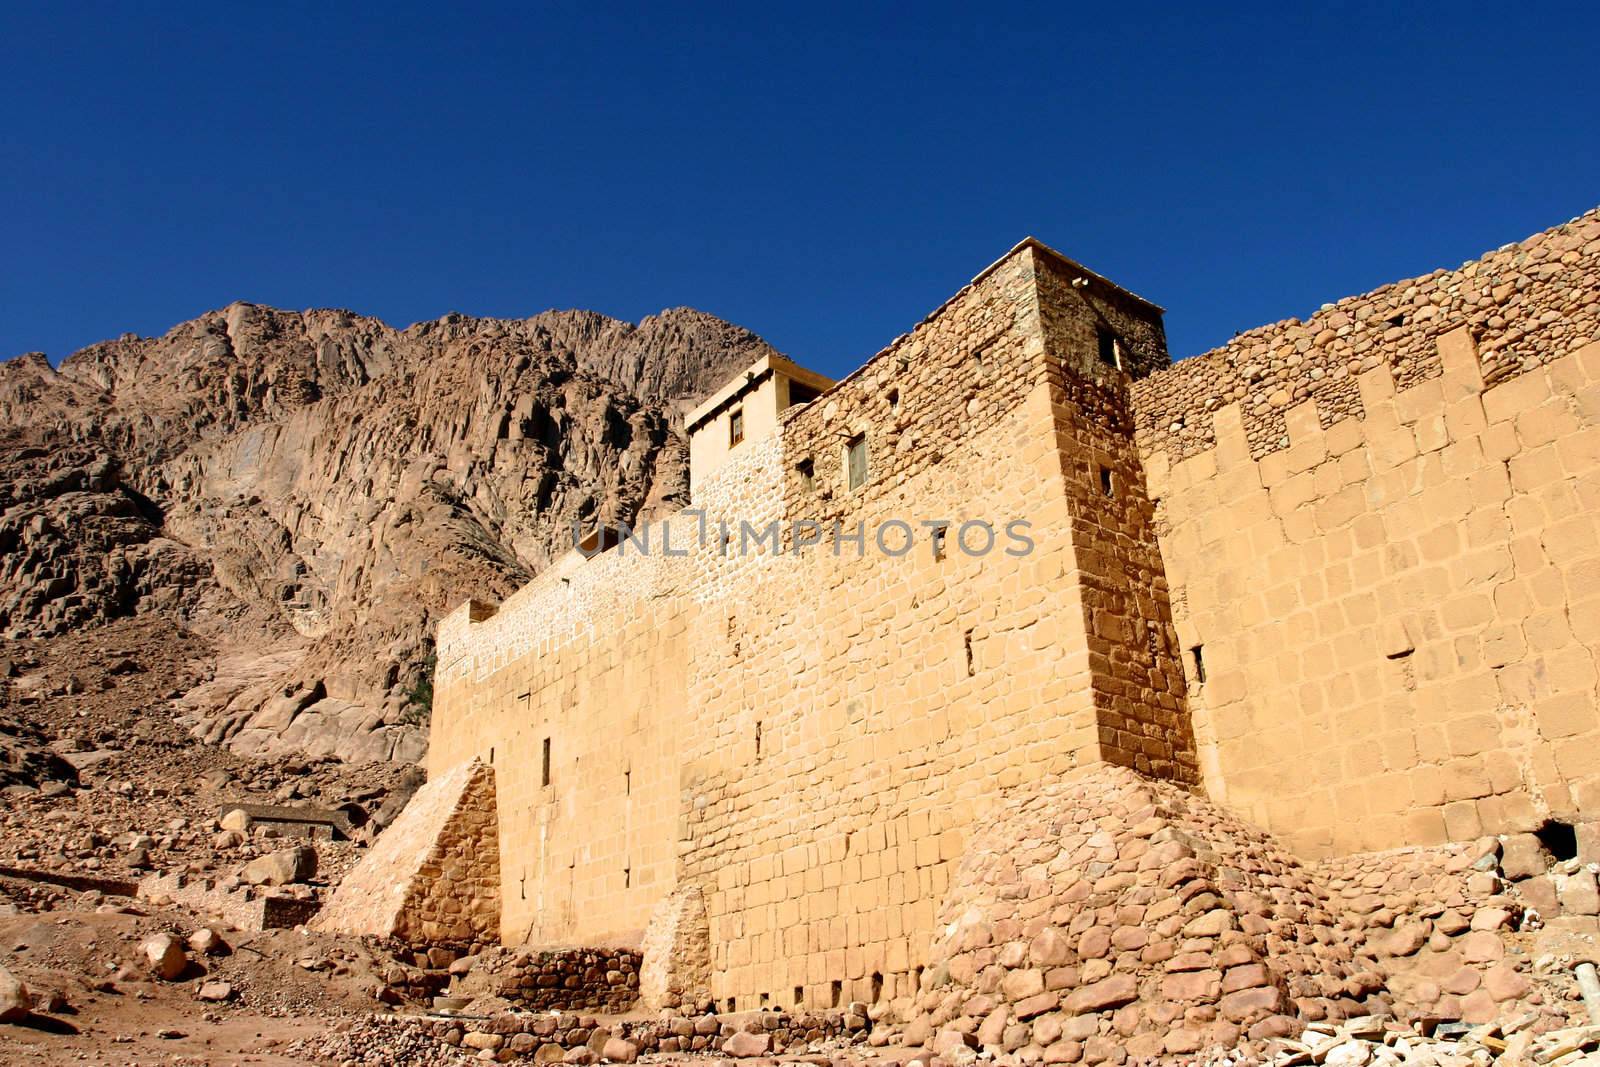 Monastery St catherine in Egypt - Sinai